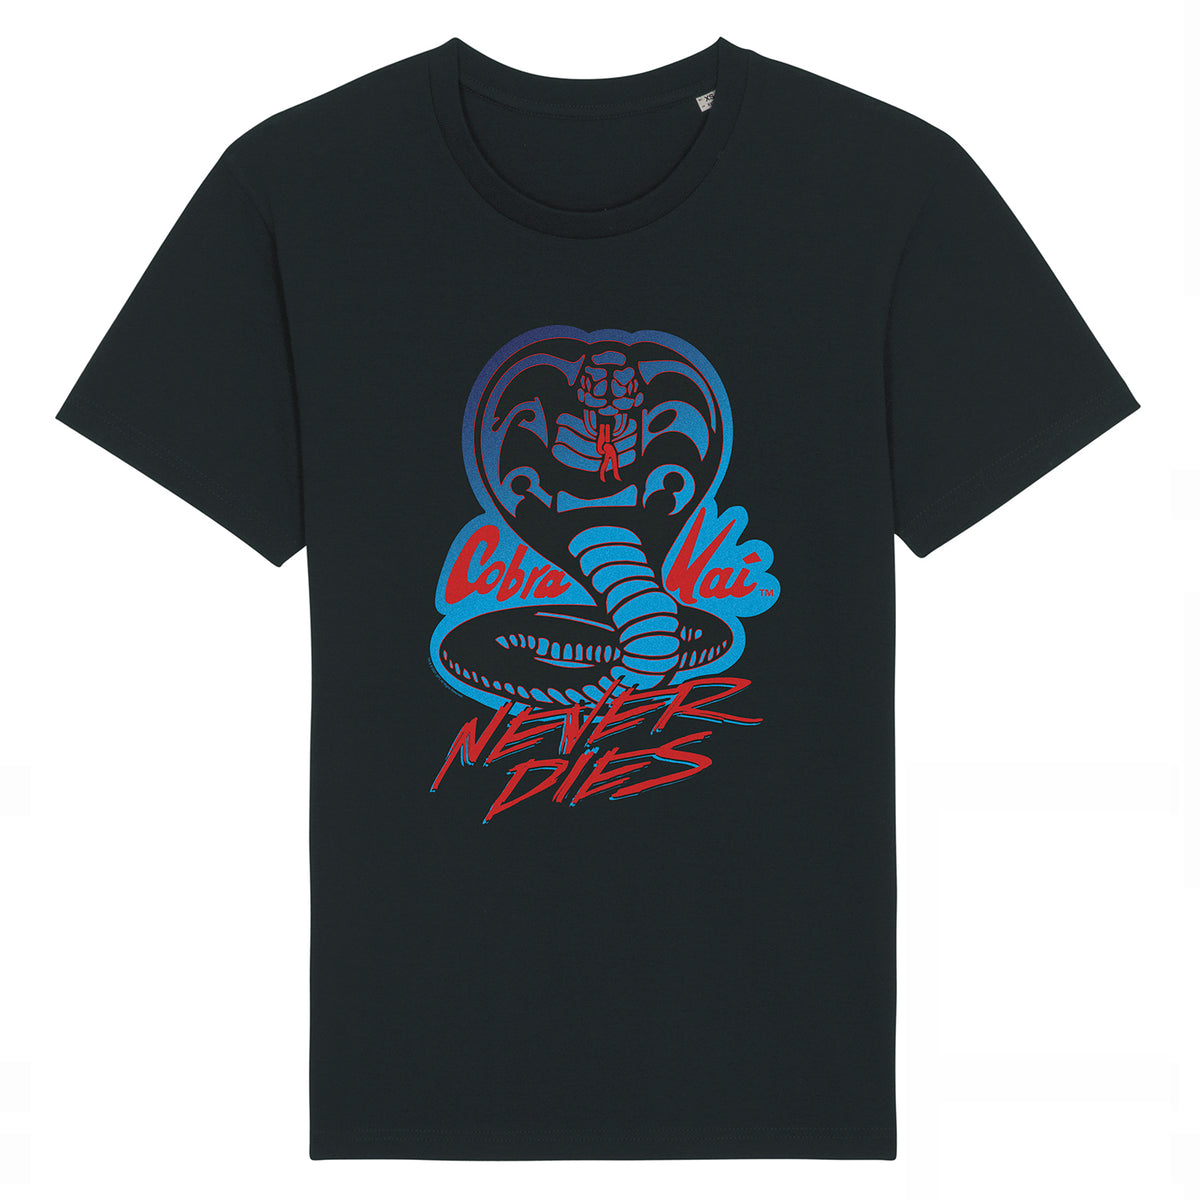 Cobra Kai Never Dies Black Unisex T-Shirt